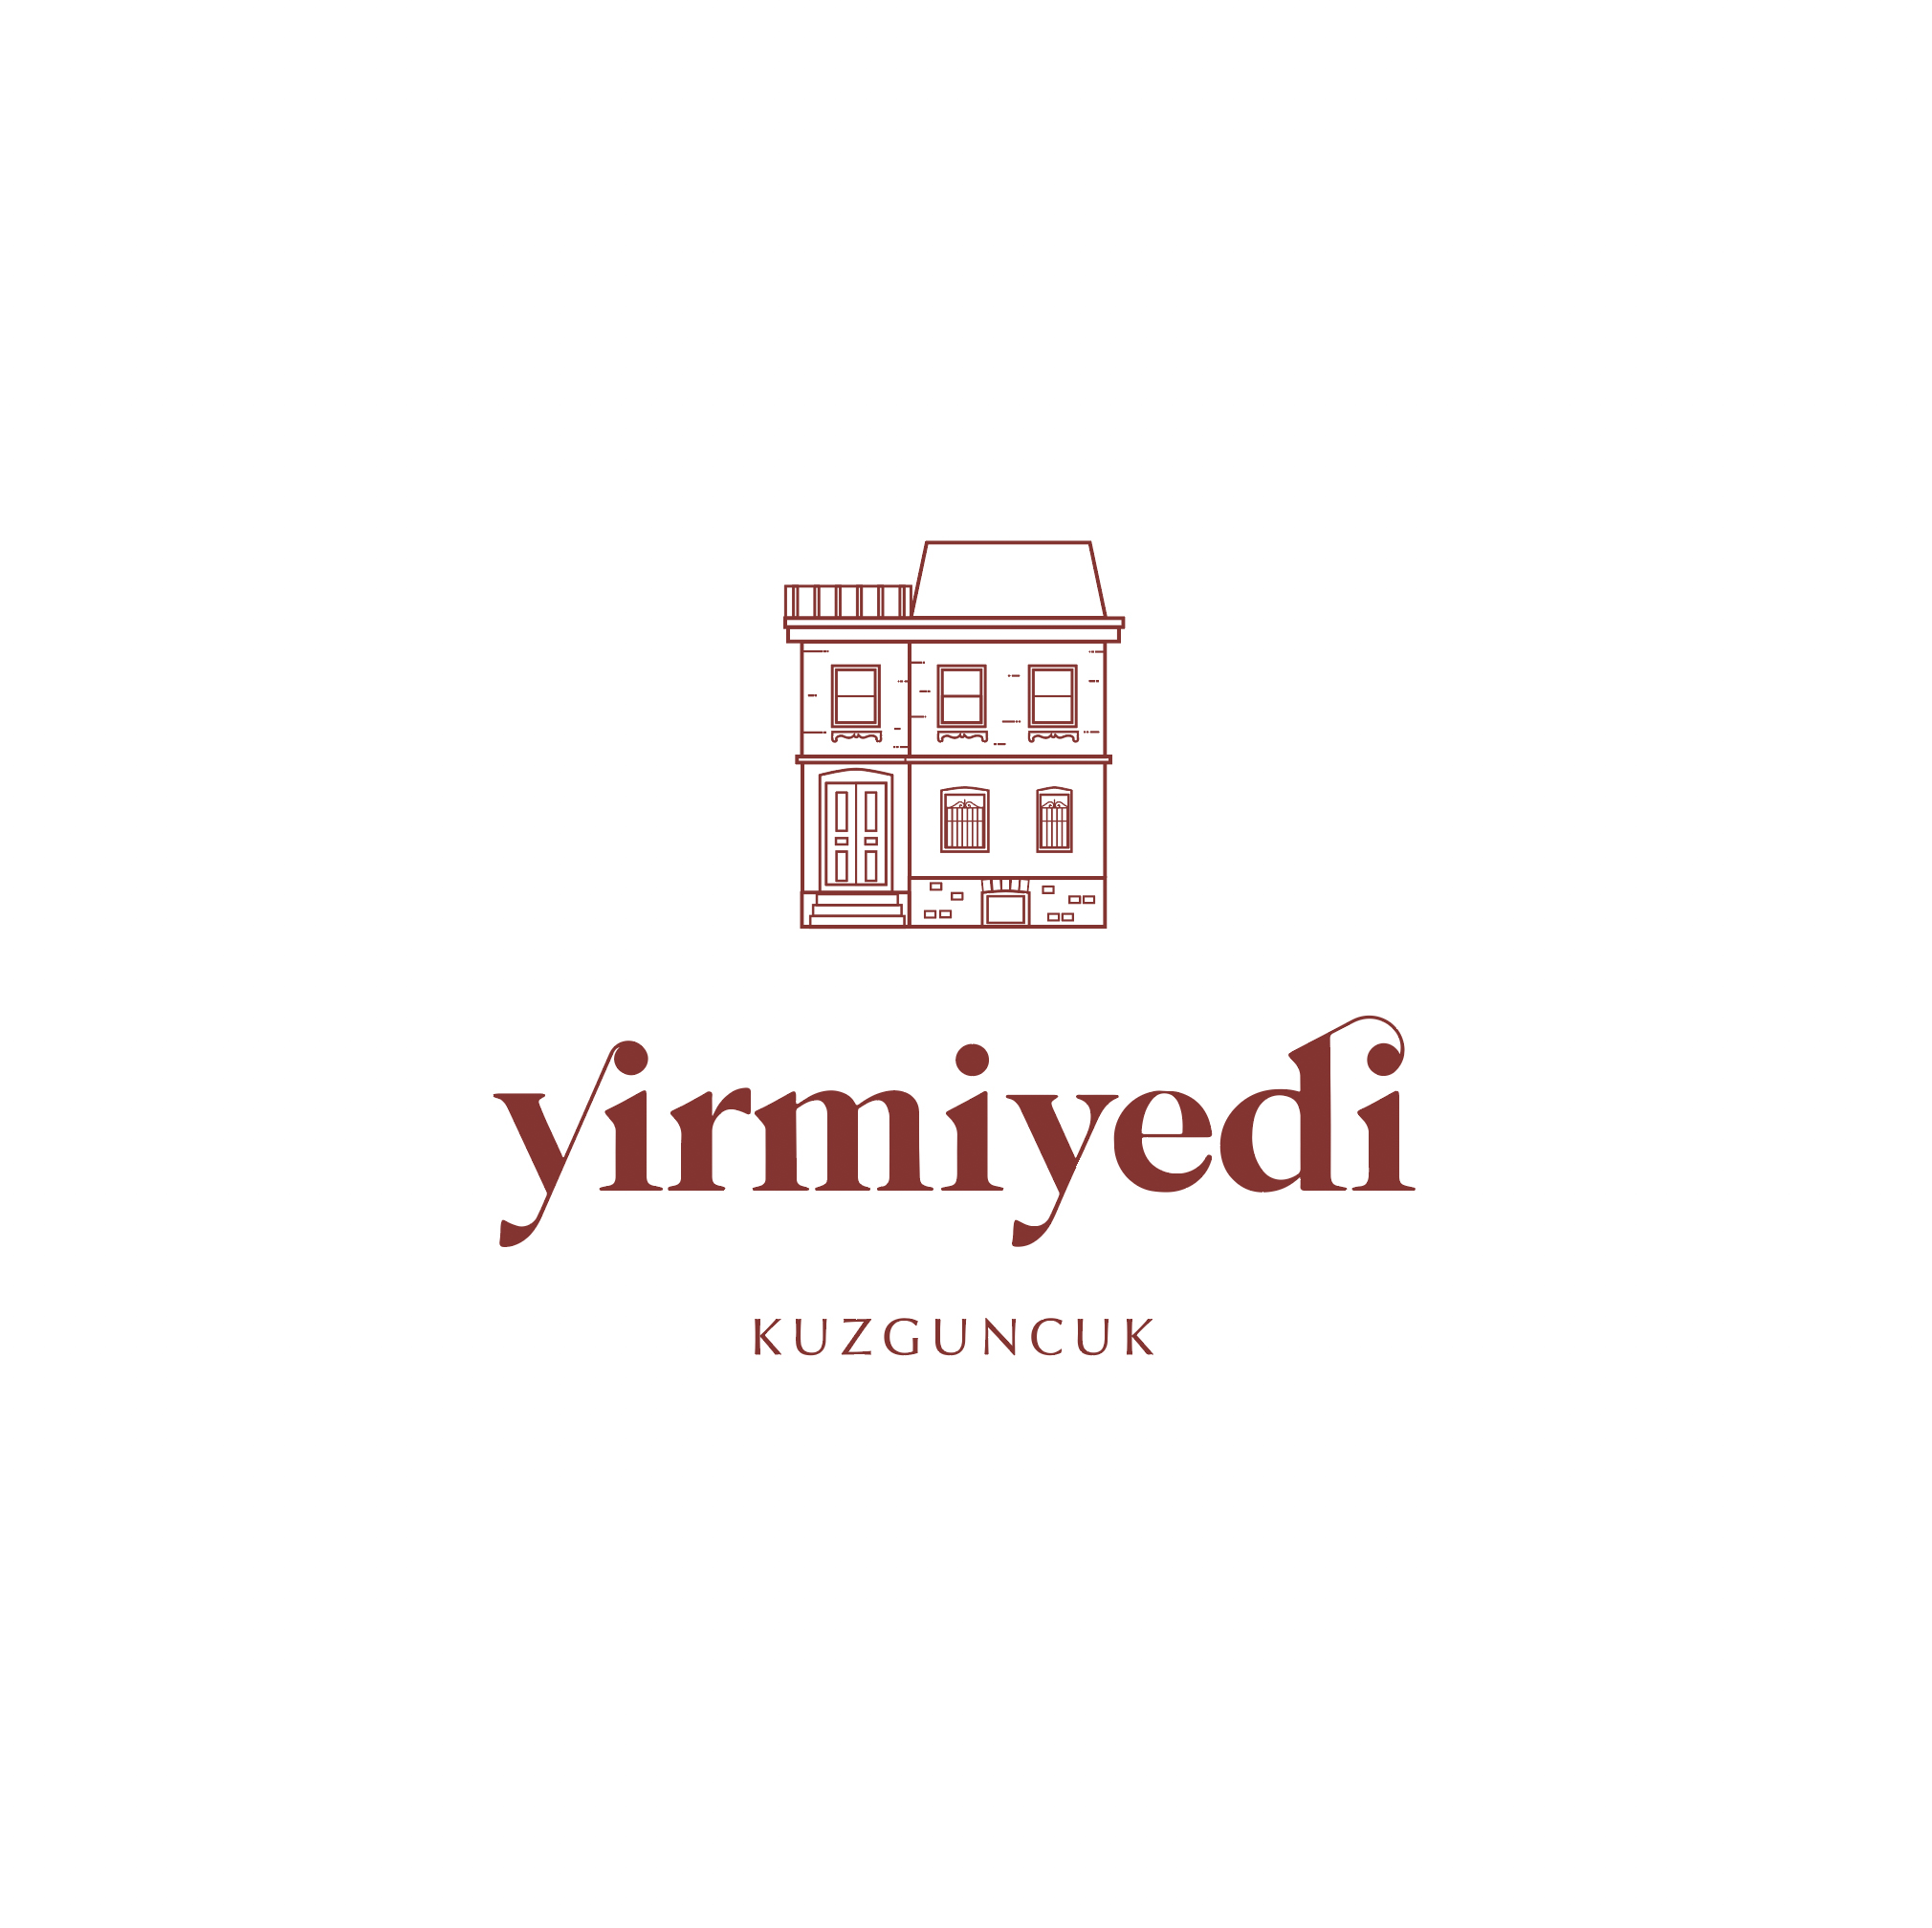 yirmiyedi logo 2 copy